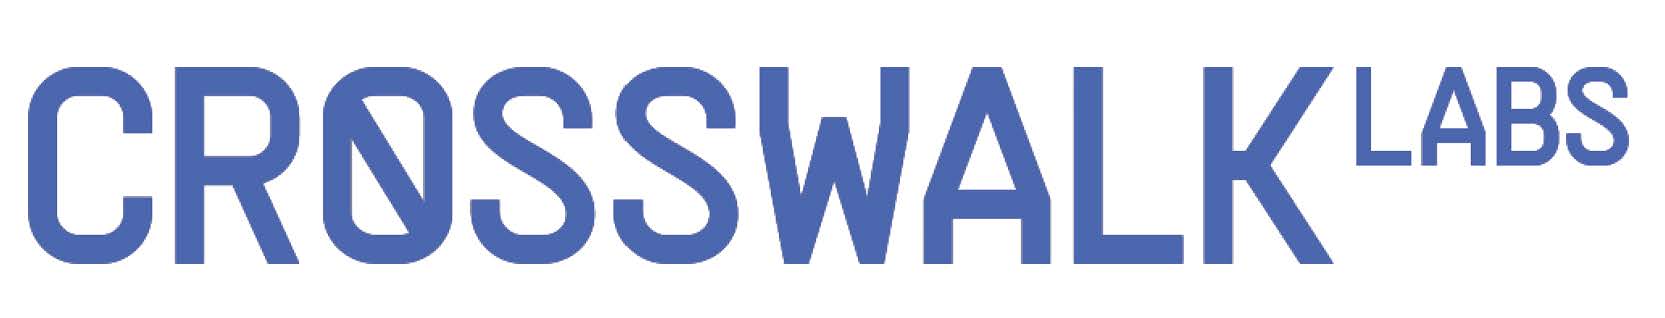 Blue logo that says Crosswalk Labs